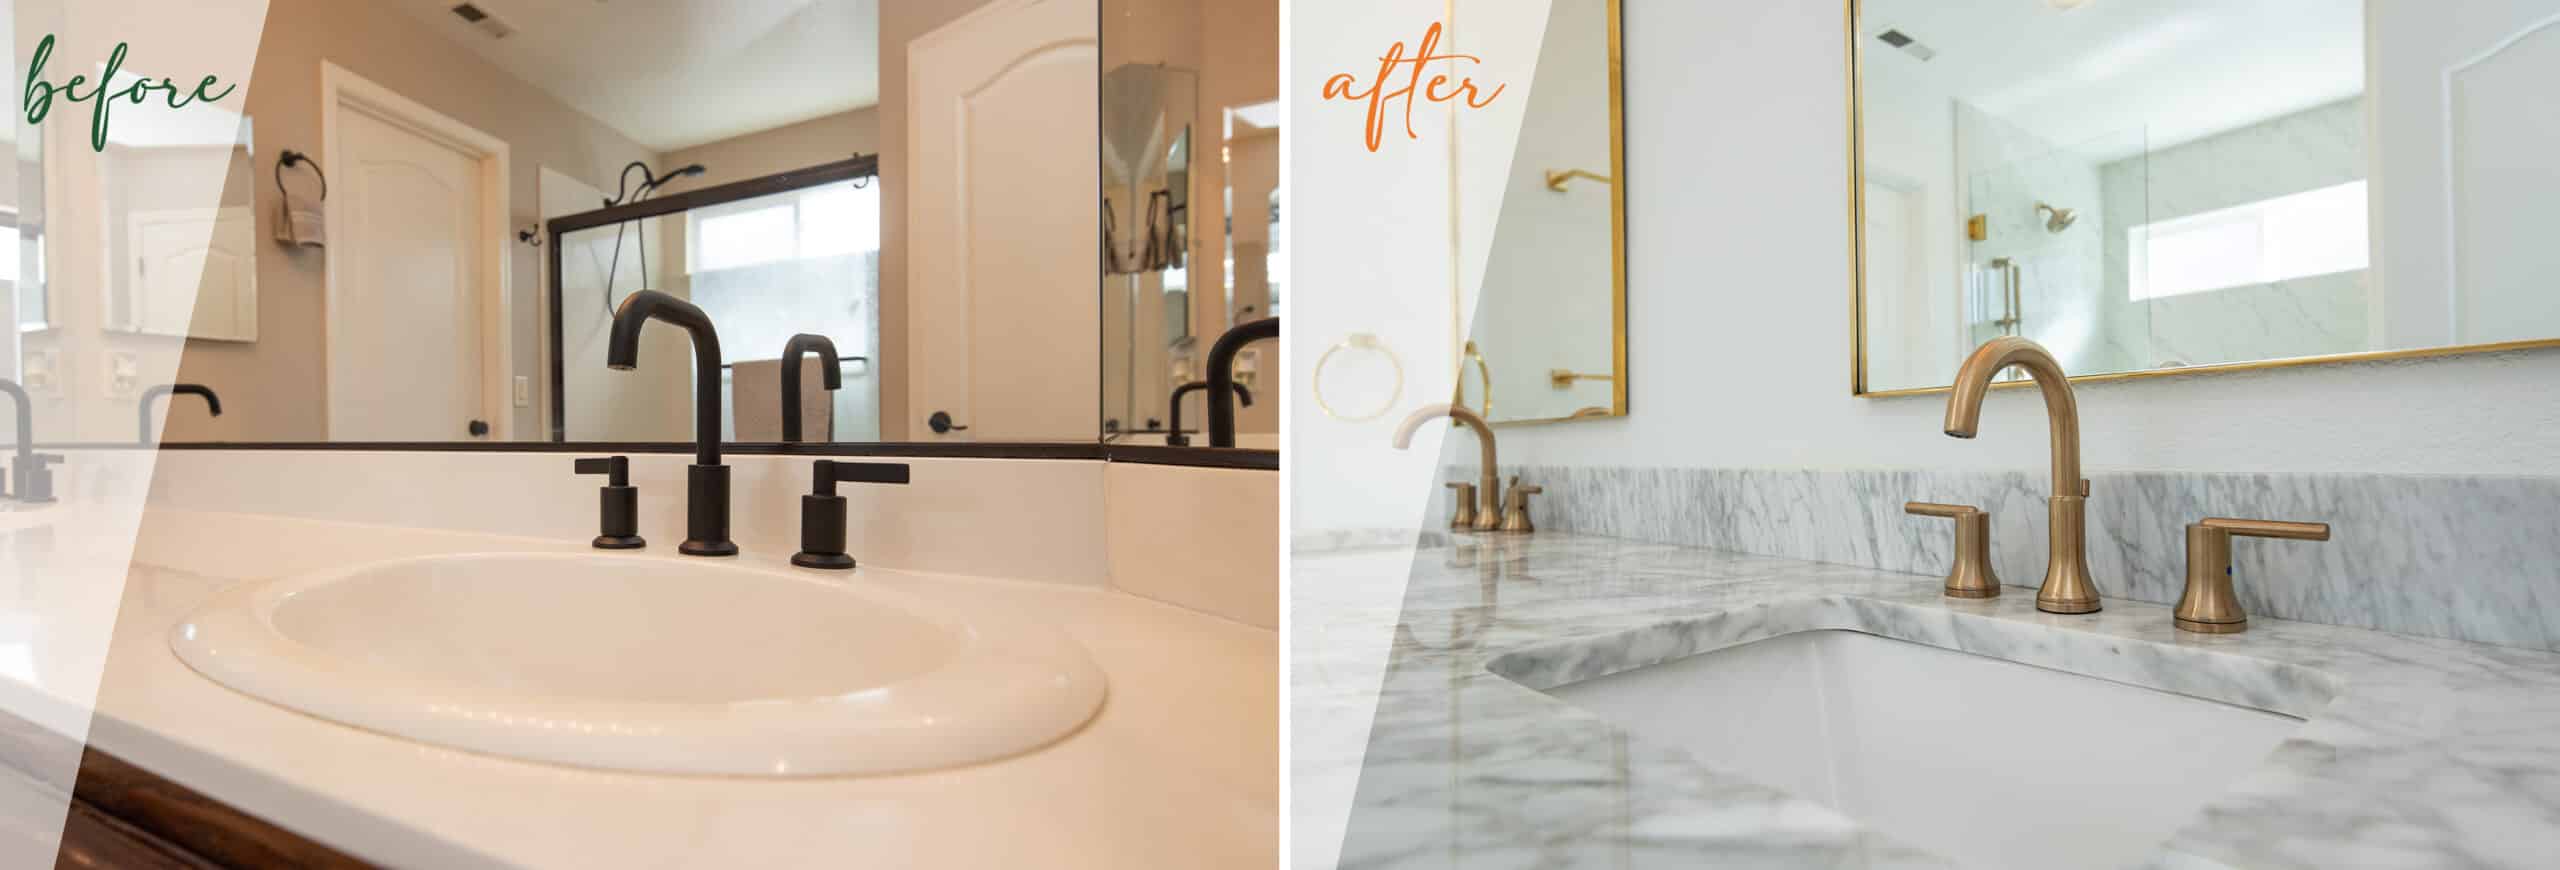 Before & After Bathroom Remodel 